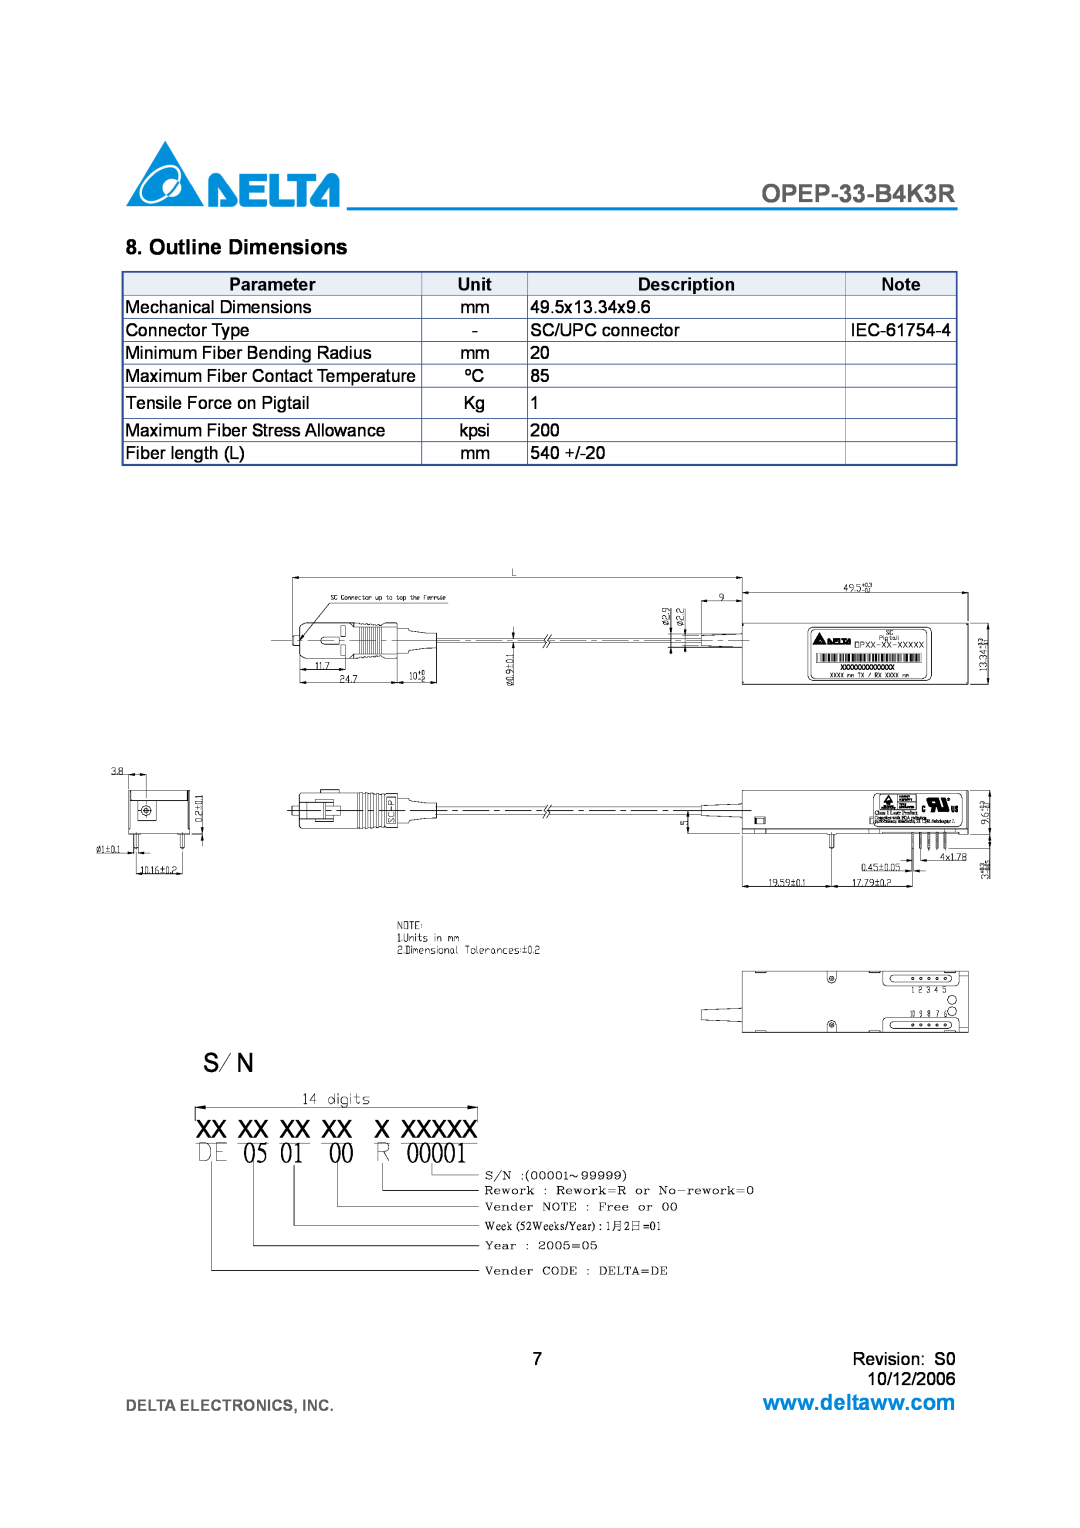 Delta Electronics OPEP-33-B4K3R manual Outline Dimensions, kpsi 